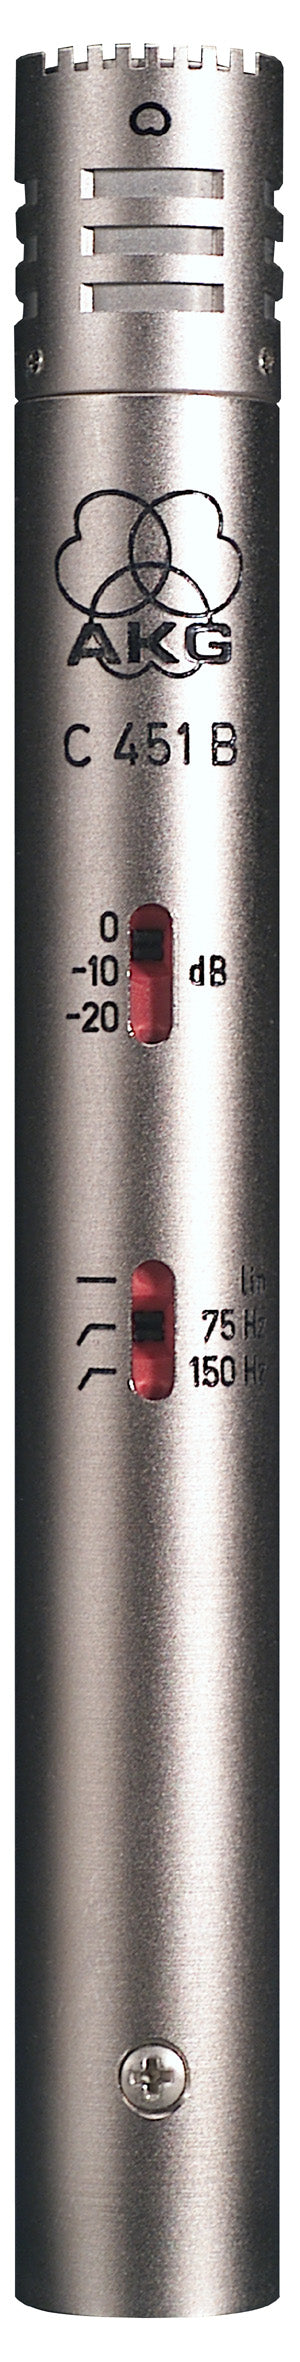 AKG C451B Small Diaphragm Condenser Microphone